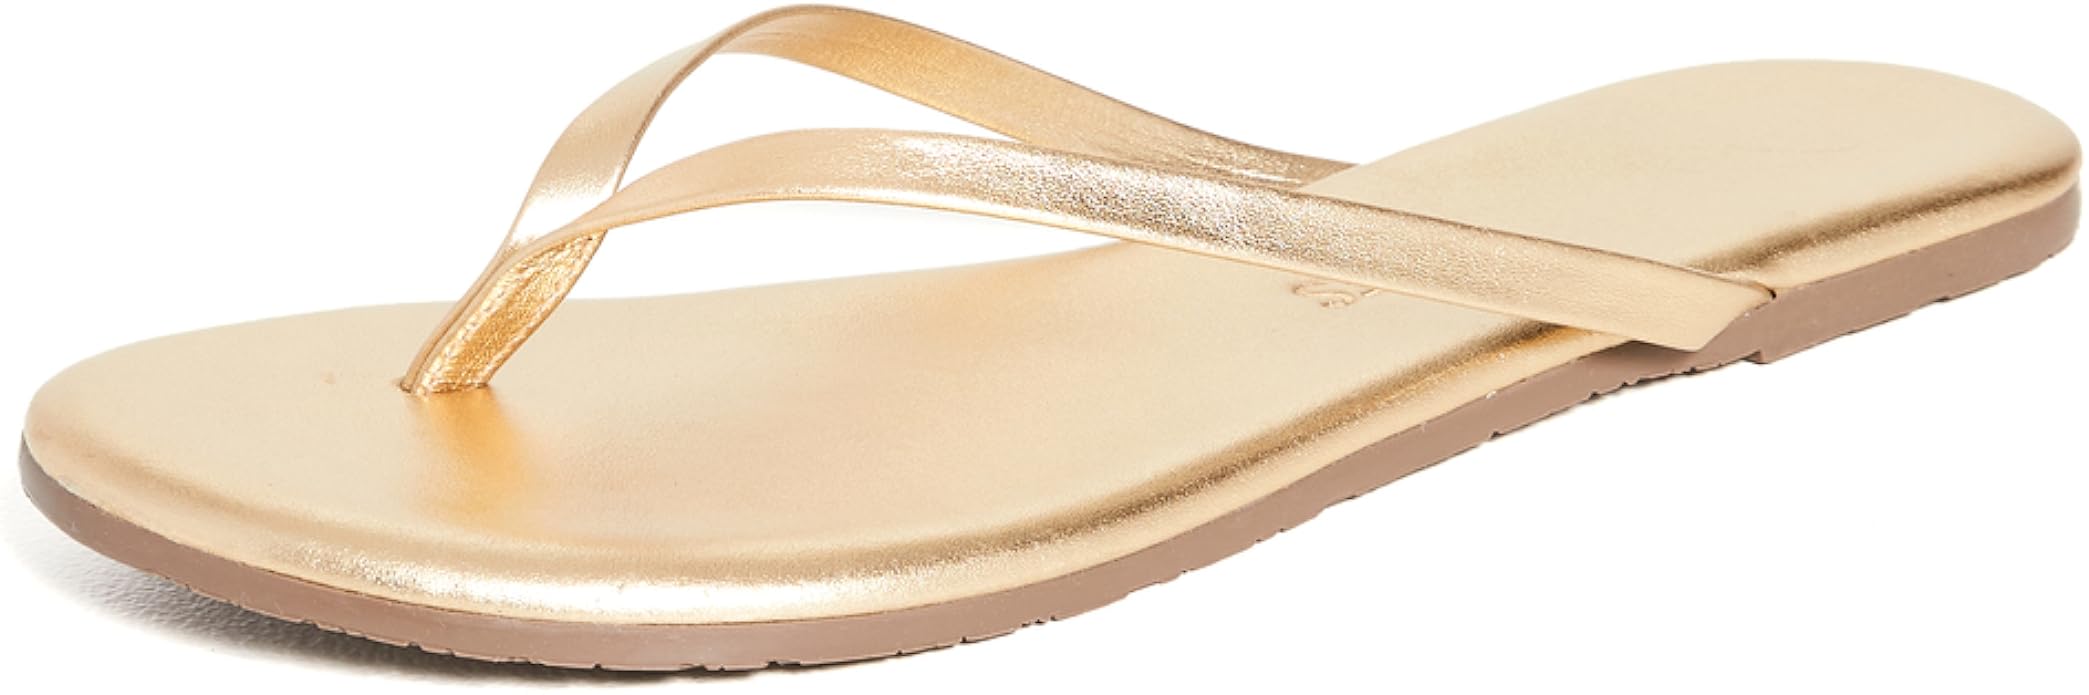 gold-flip-flops